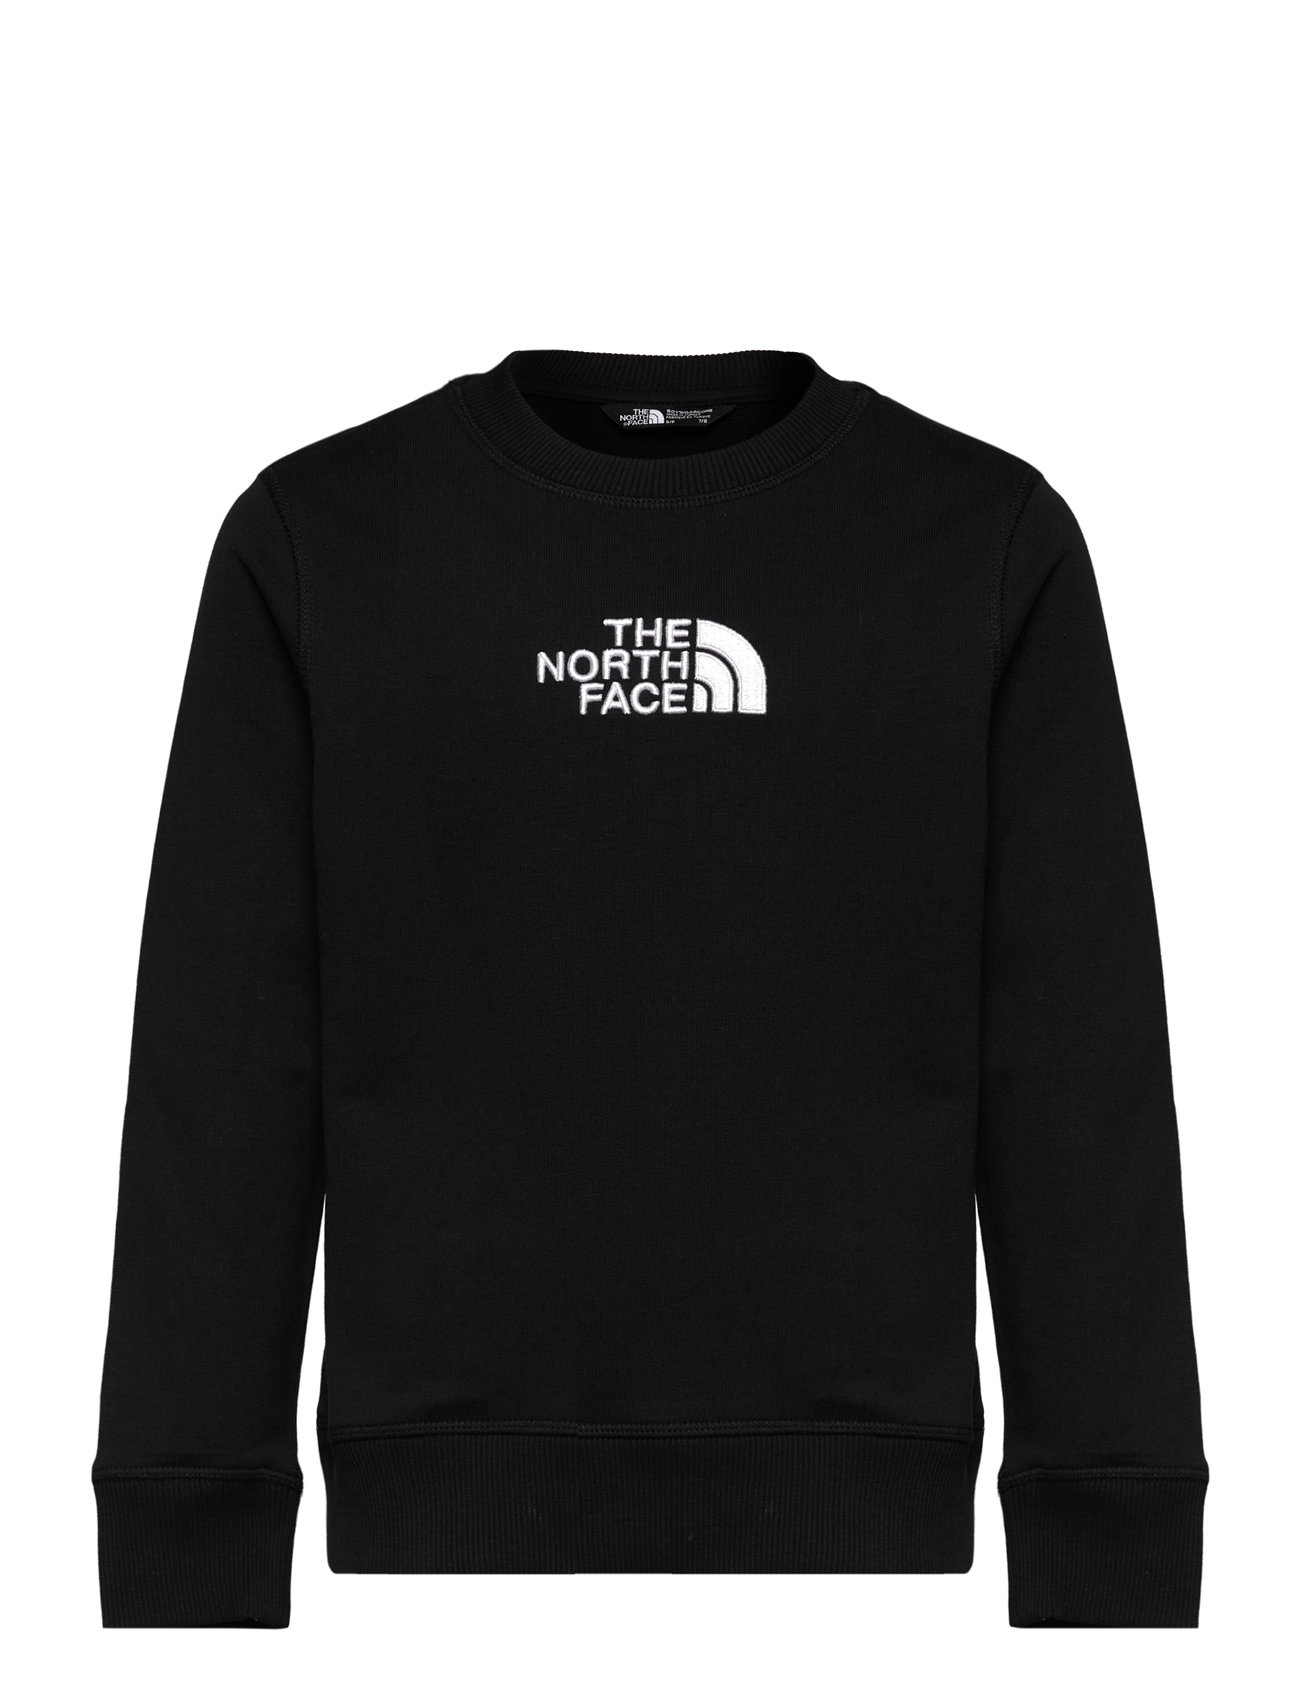 B Drew Peak Light Crew Sport Sweatshirts & Hoodies Sweatshirts Black The North Face